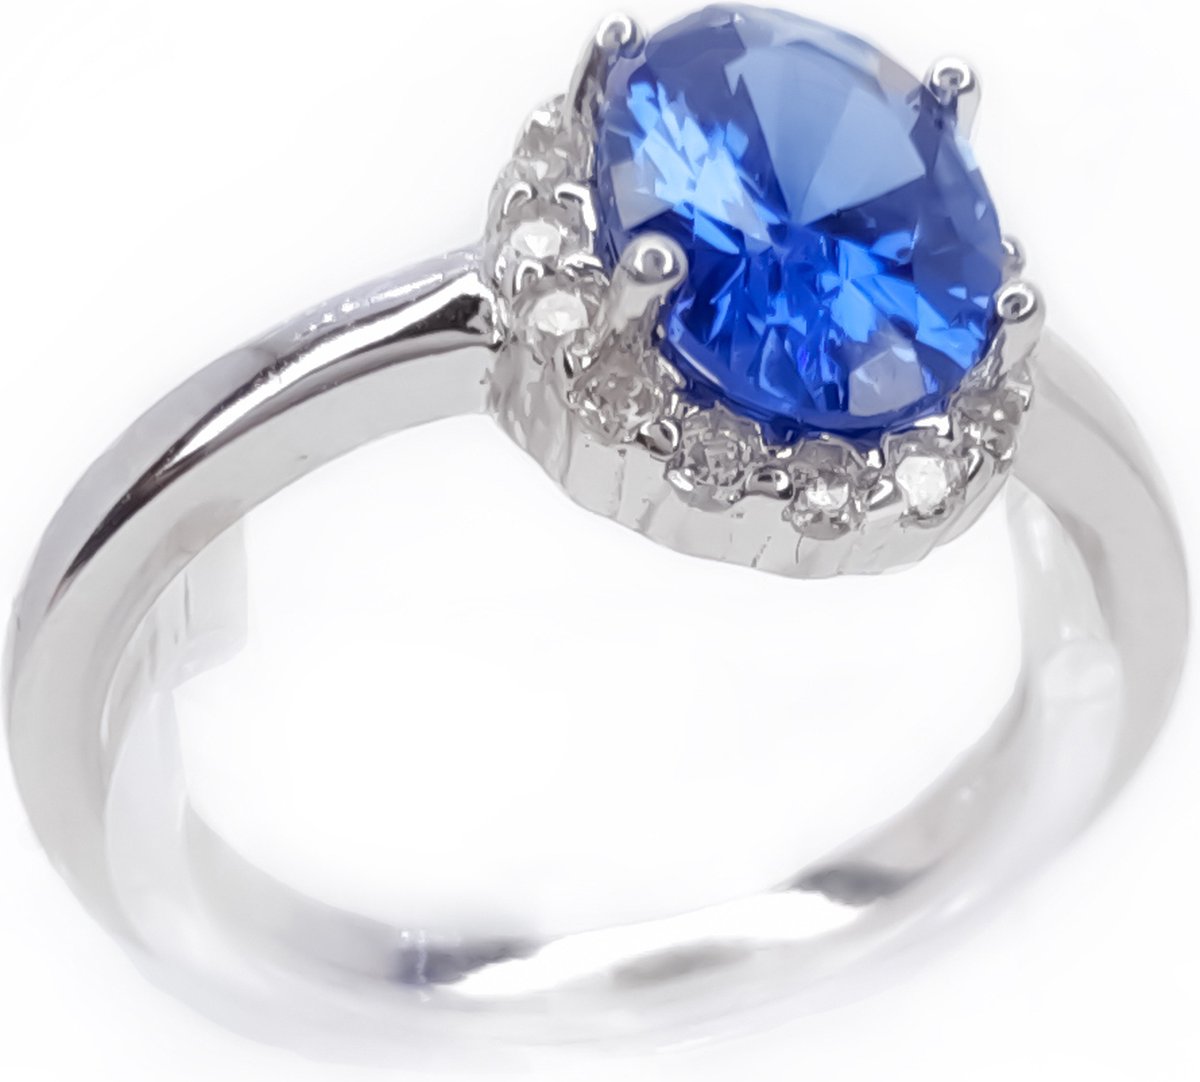 Prometida/ Iconic Ovaal-Cut Koningsblauw Halo Verlovingsring/ Sterling Zilver 925/ Princes Diana/ zie filmpje